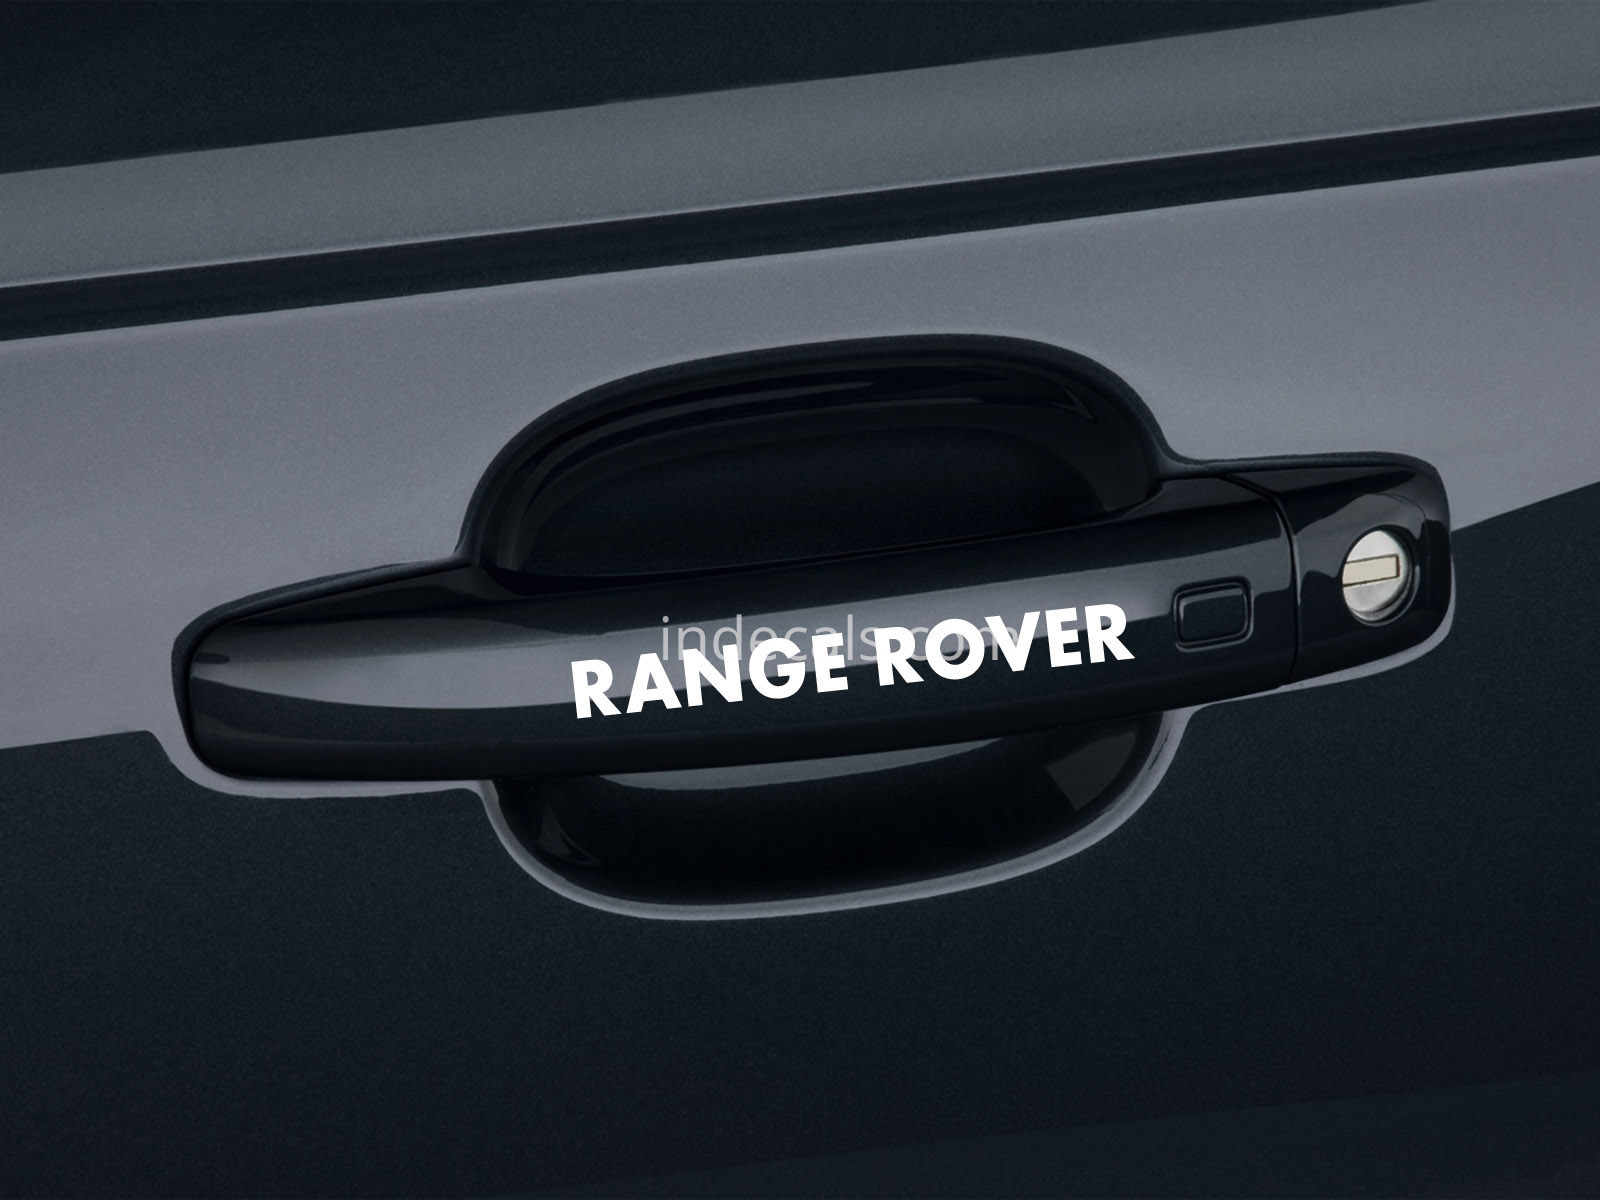 6 x Range Rover Stickers for Door Handles - White